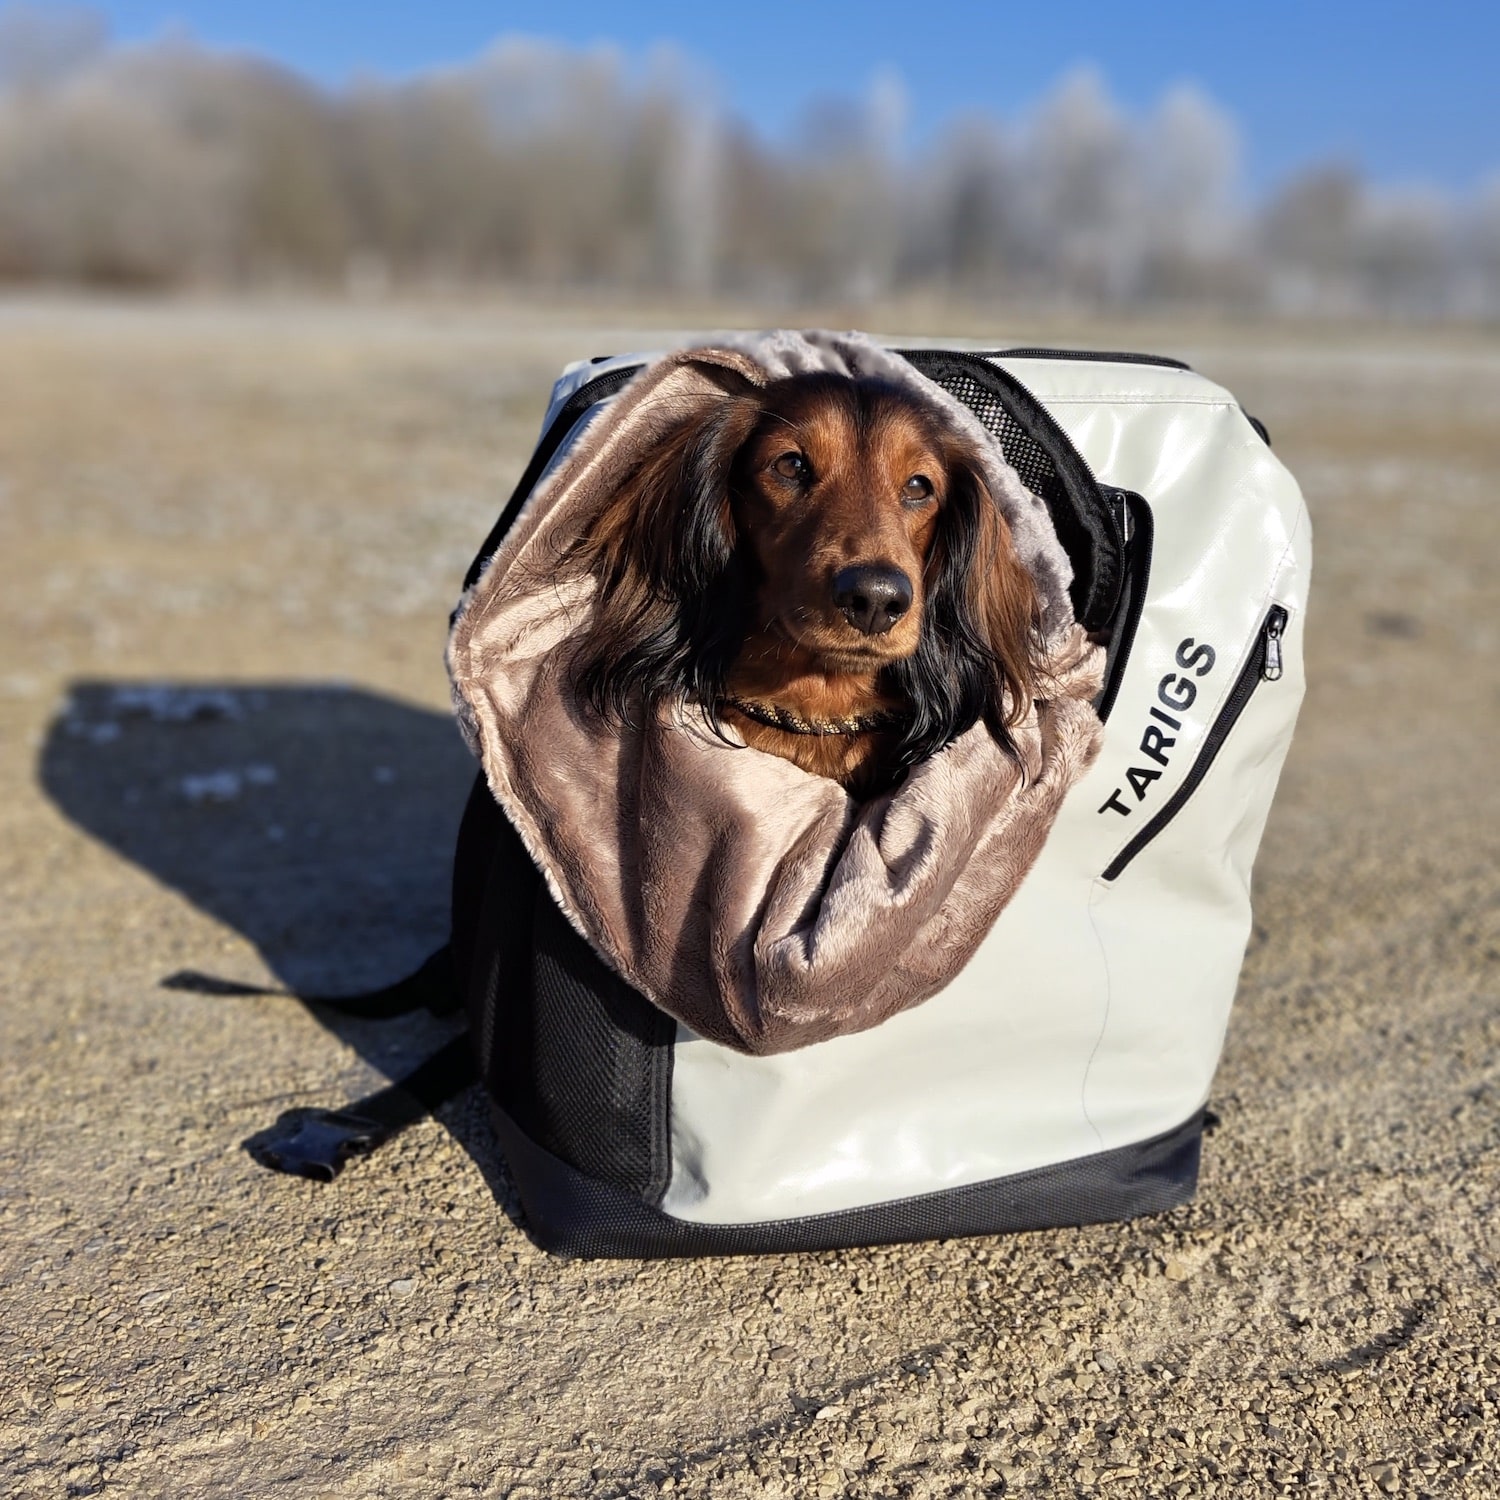 Miniature dachshund sitting cuddled up in sleeping bag in MountainRock Backpack - Medium